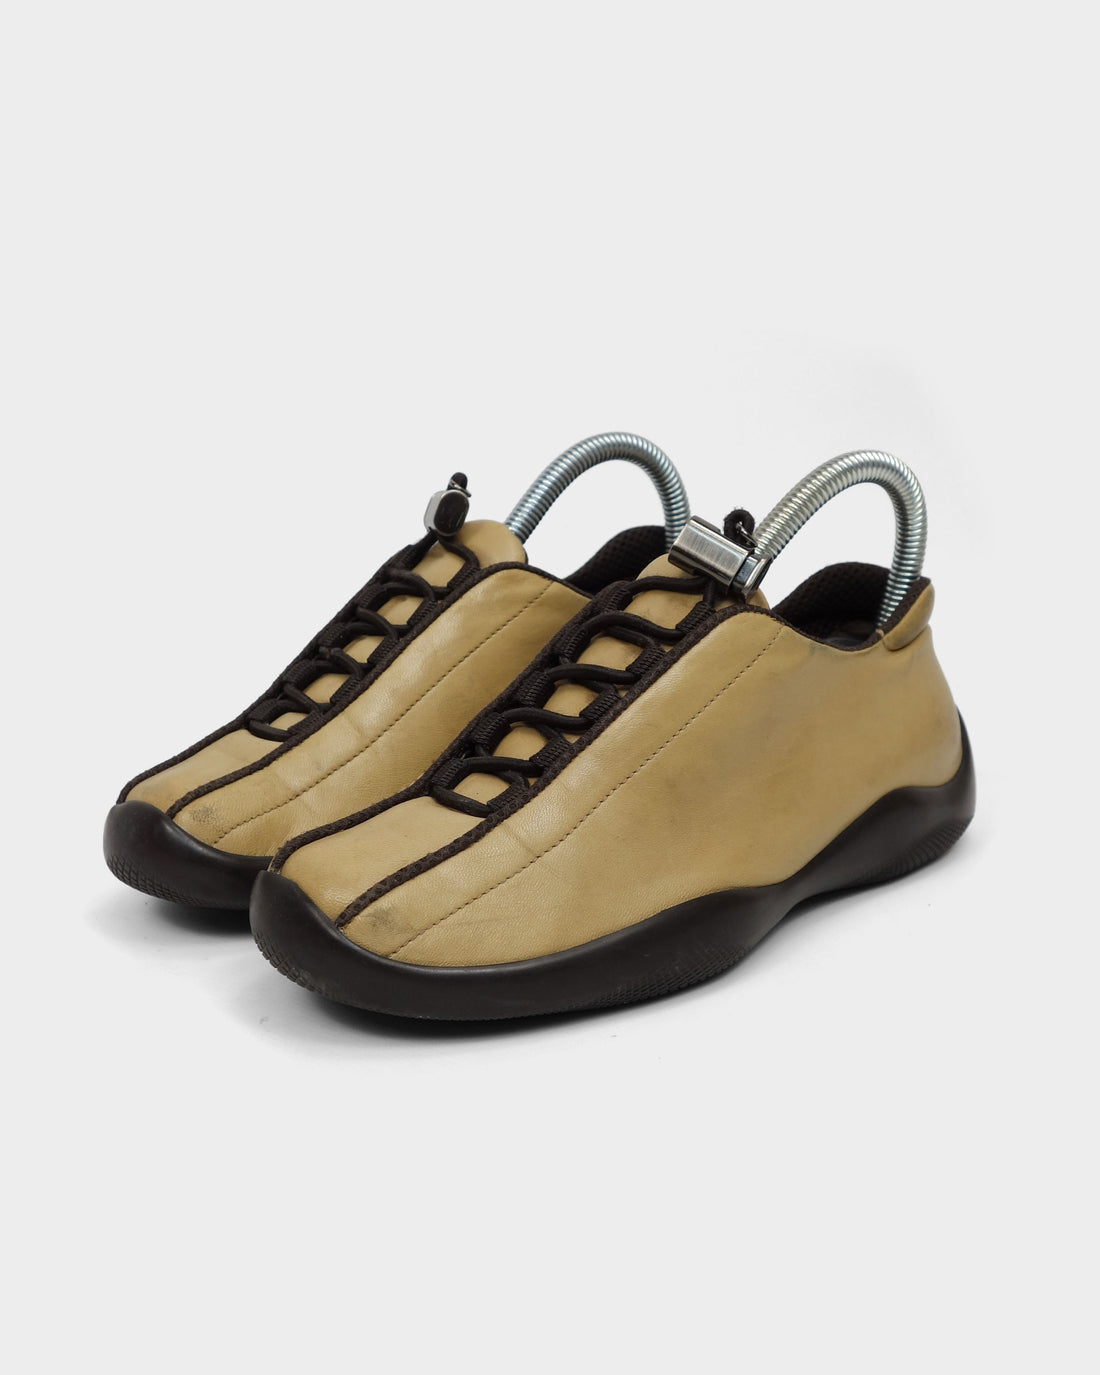 Prada Nappa Sport Beige Leather Sneakers 2000's